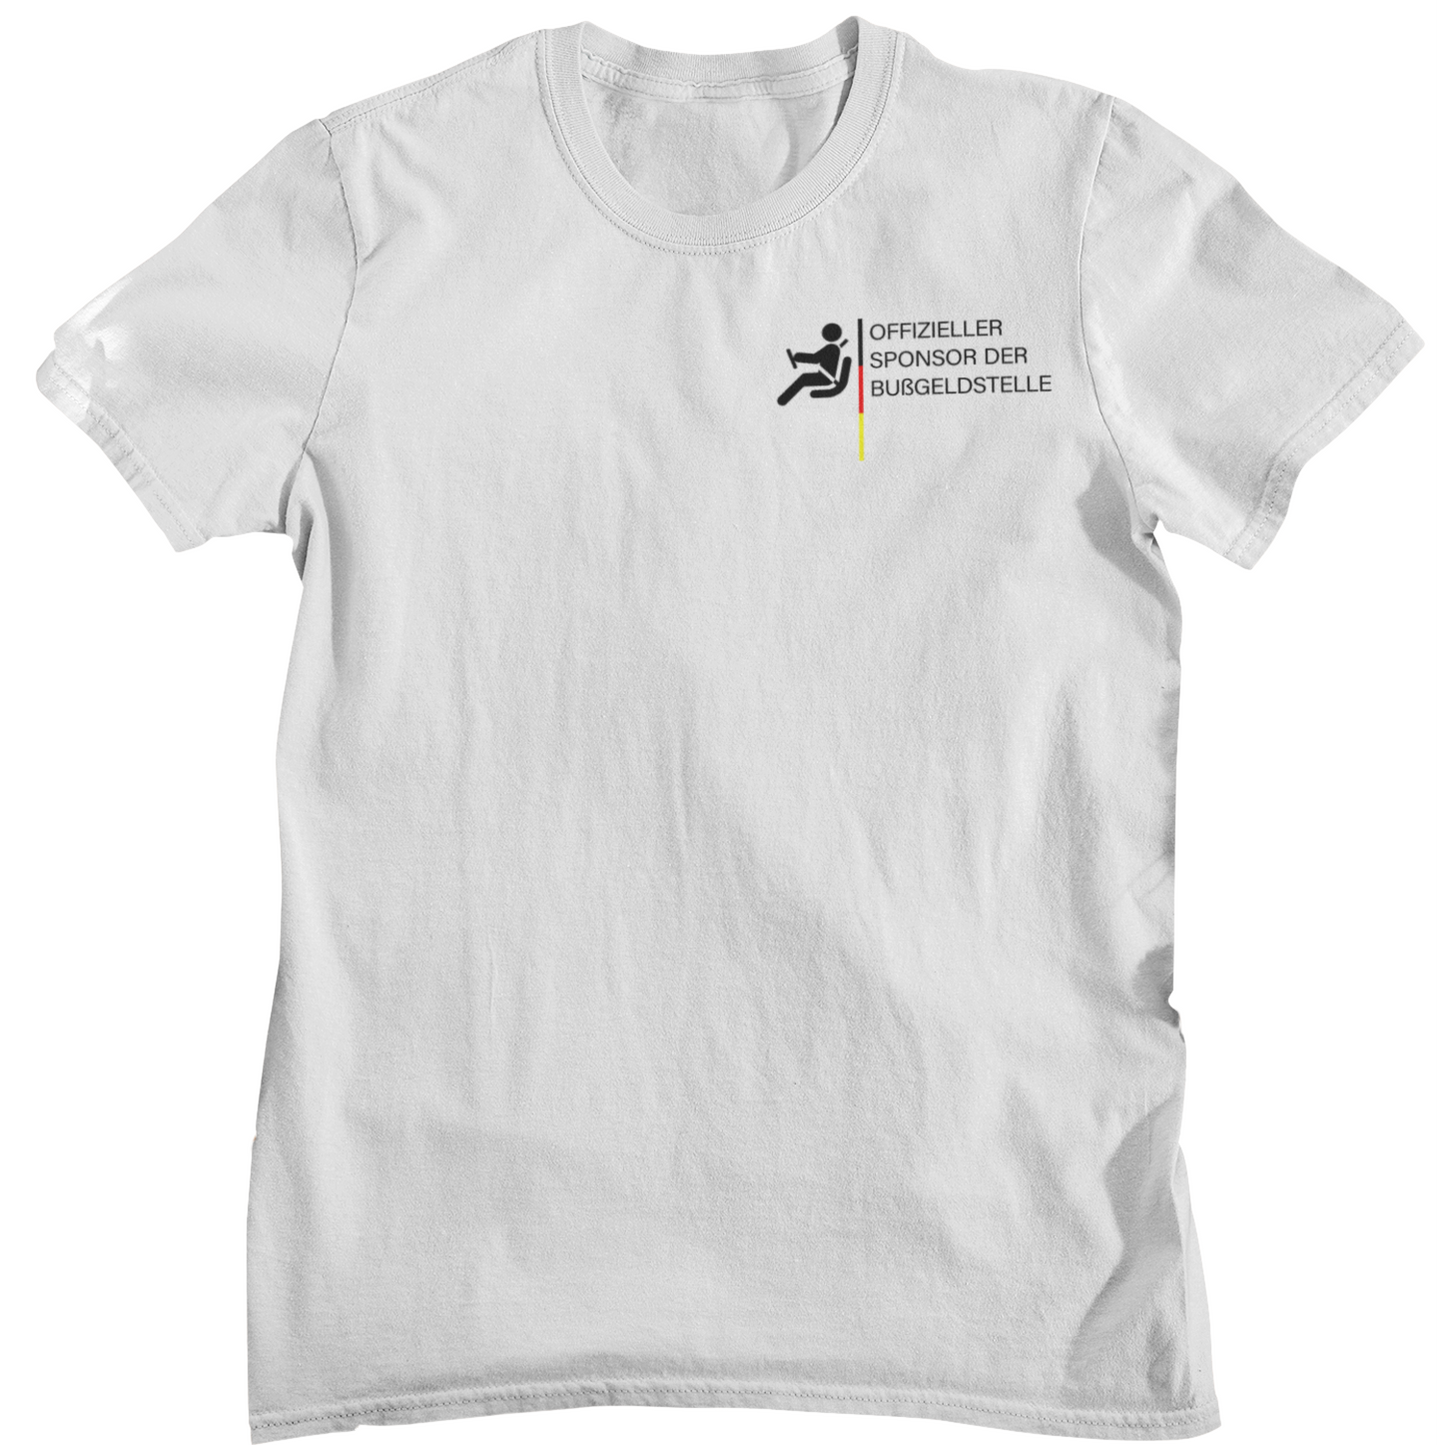 Offizieller Sponsor der Bußgeldstelle - Unisex Shirt